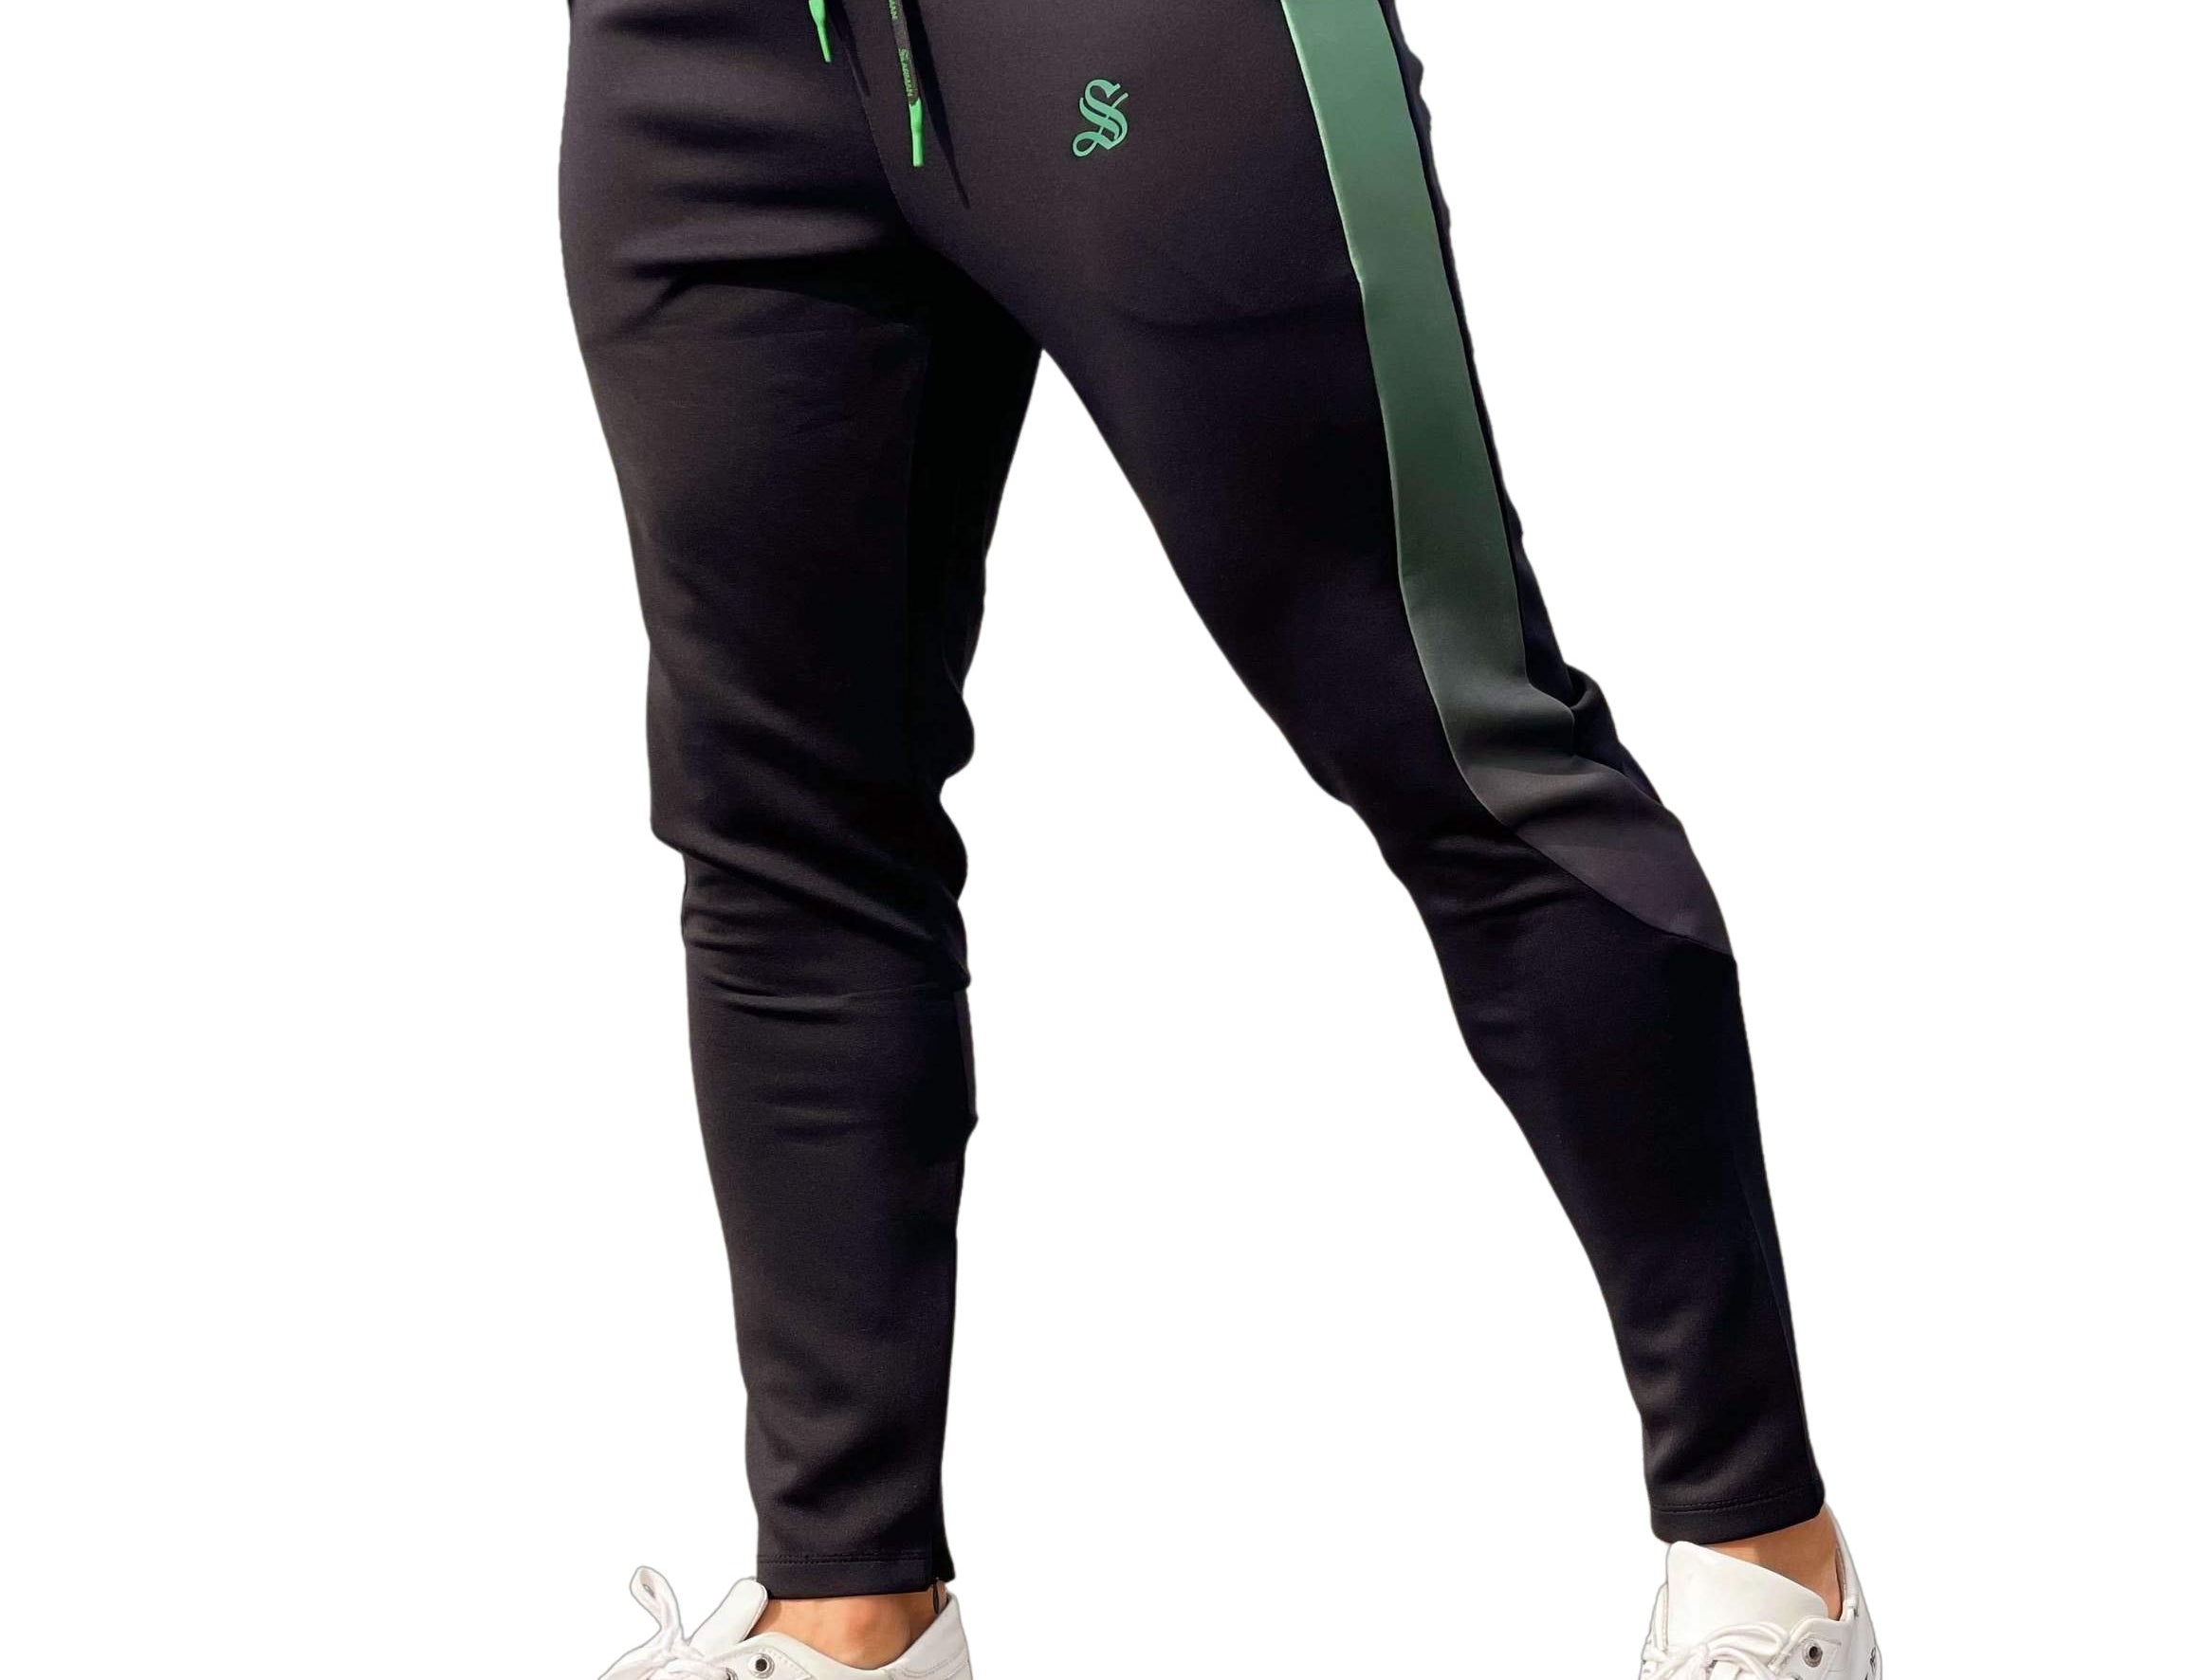 Platinisus - Black/Khaki Track Pant for Men - Sarman Fashion - Wholesale Clothing Fashion Brand for Men from Canada